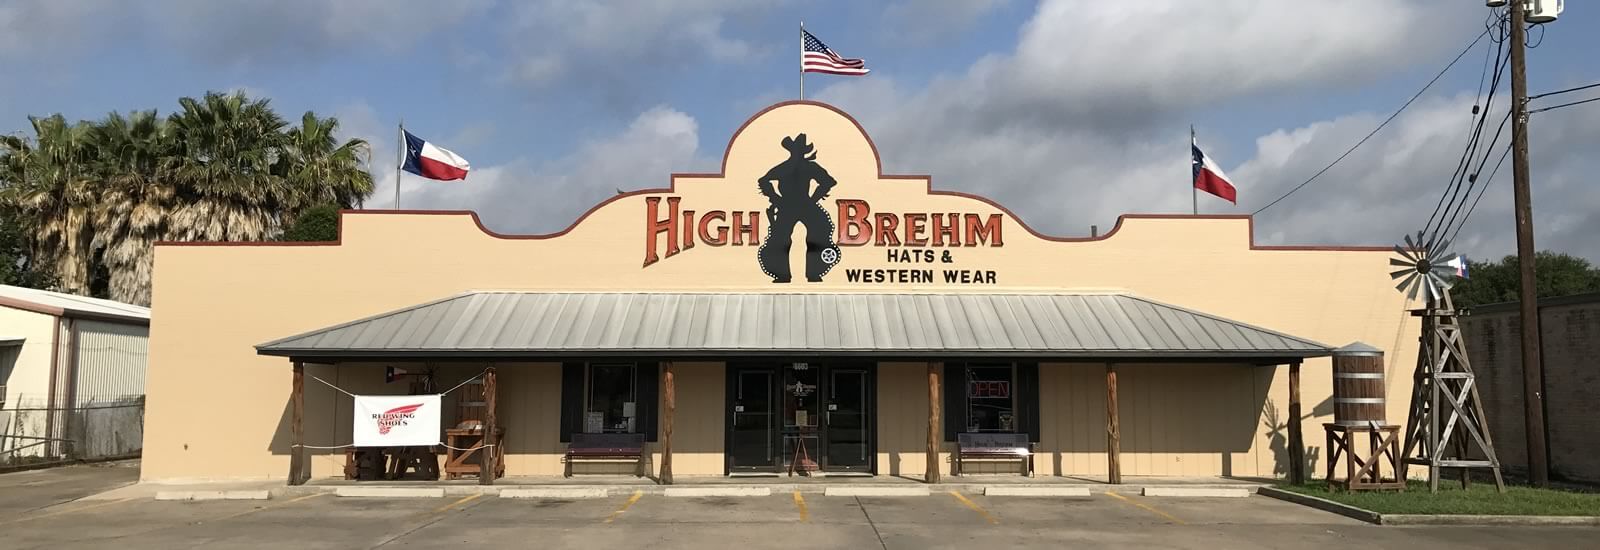 High Brehm Western Wear Store